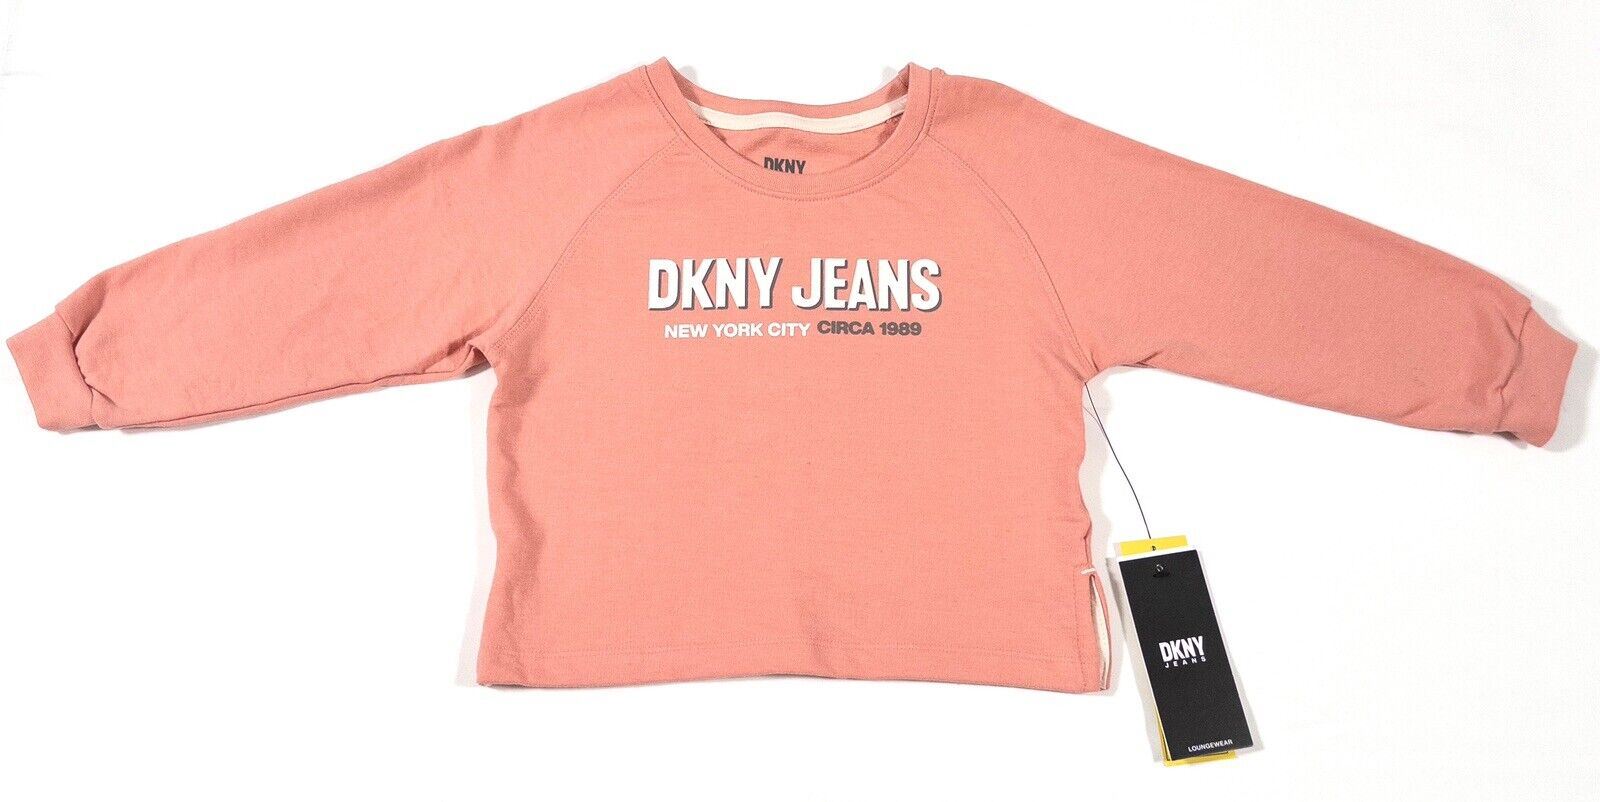 DKNY JEANS Girls Infants Pink Jumper Sweatshirt Size UK 24 Months